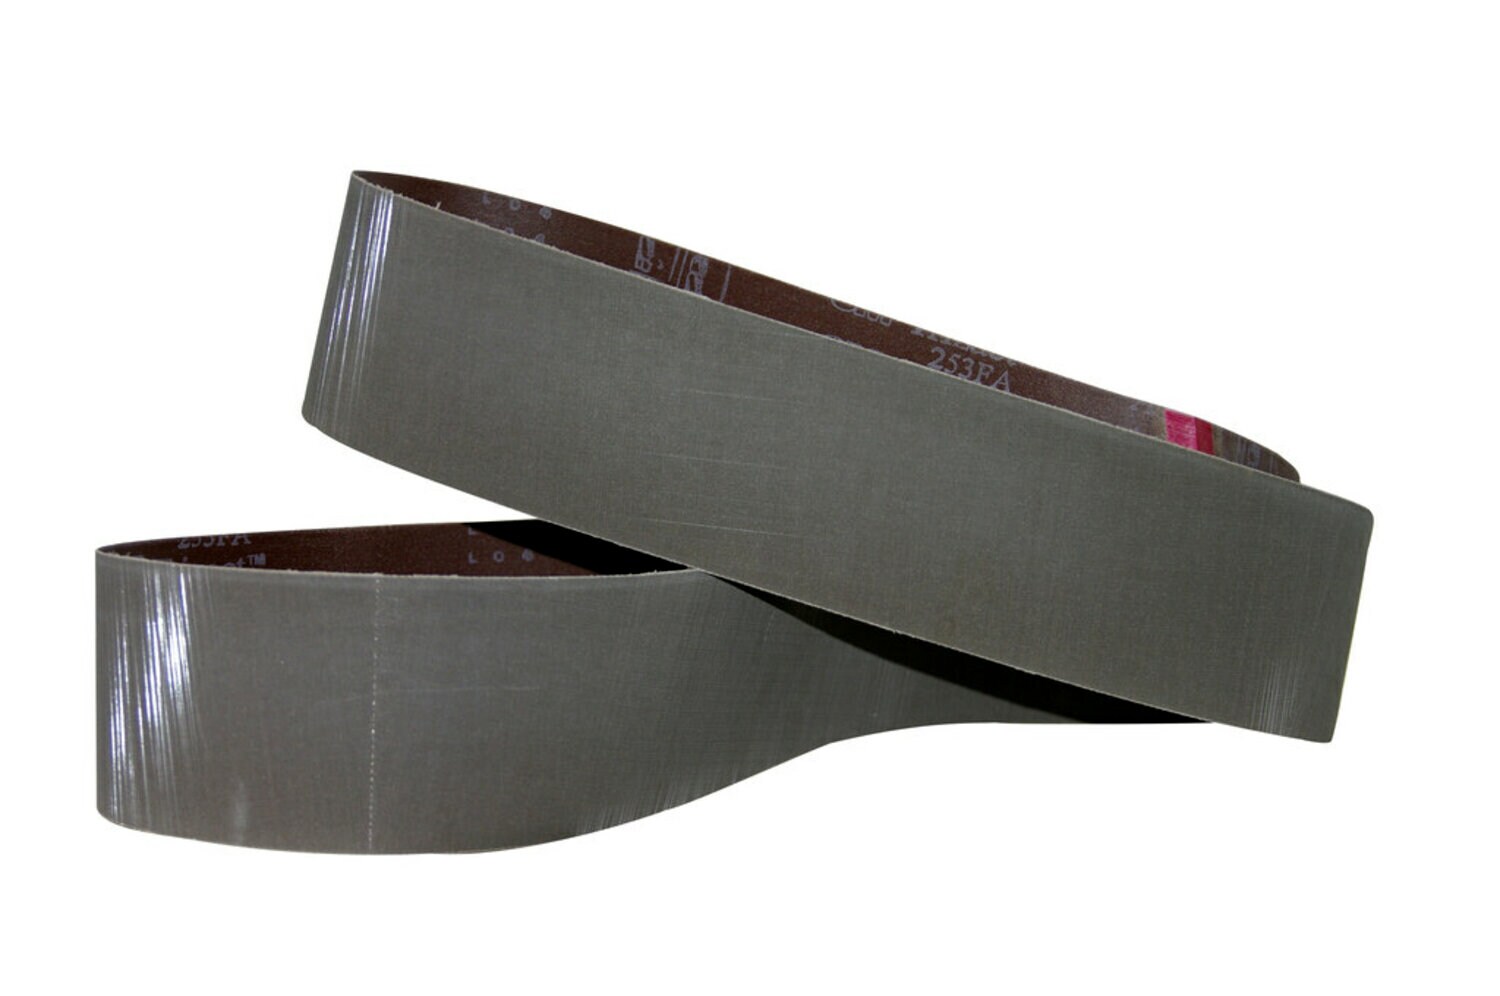 7010299957 - 3M Trizact Cloth Belt 253FA, A16 XF-weight, 37 in x 75 in, Film-lok,
No Flex, 2 ea/Case